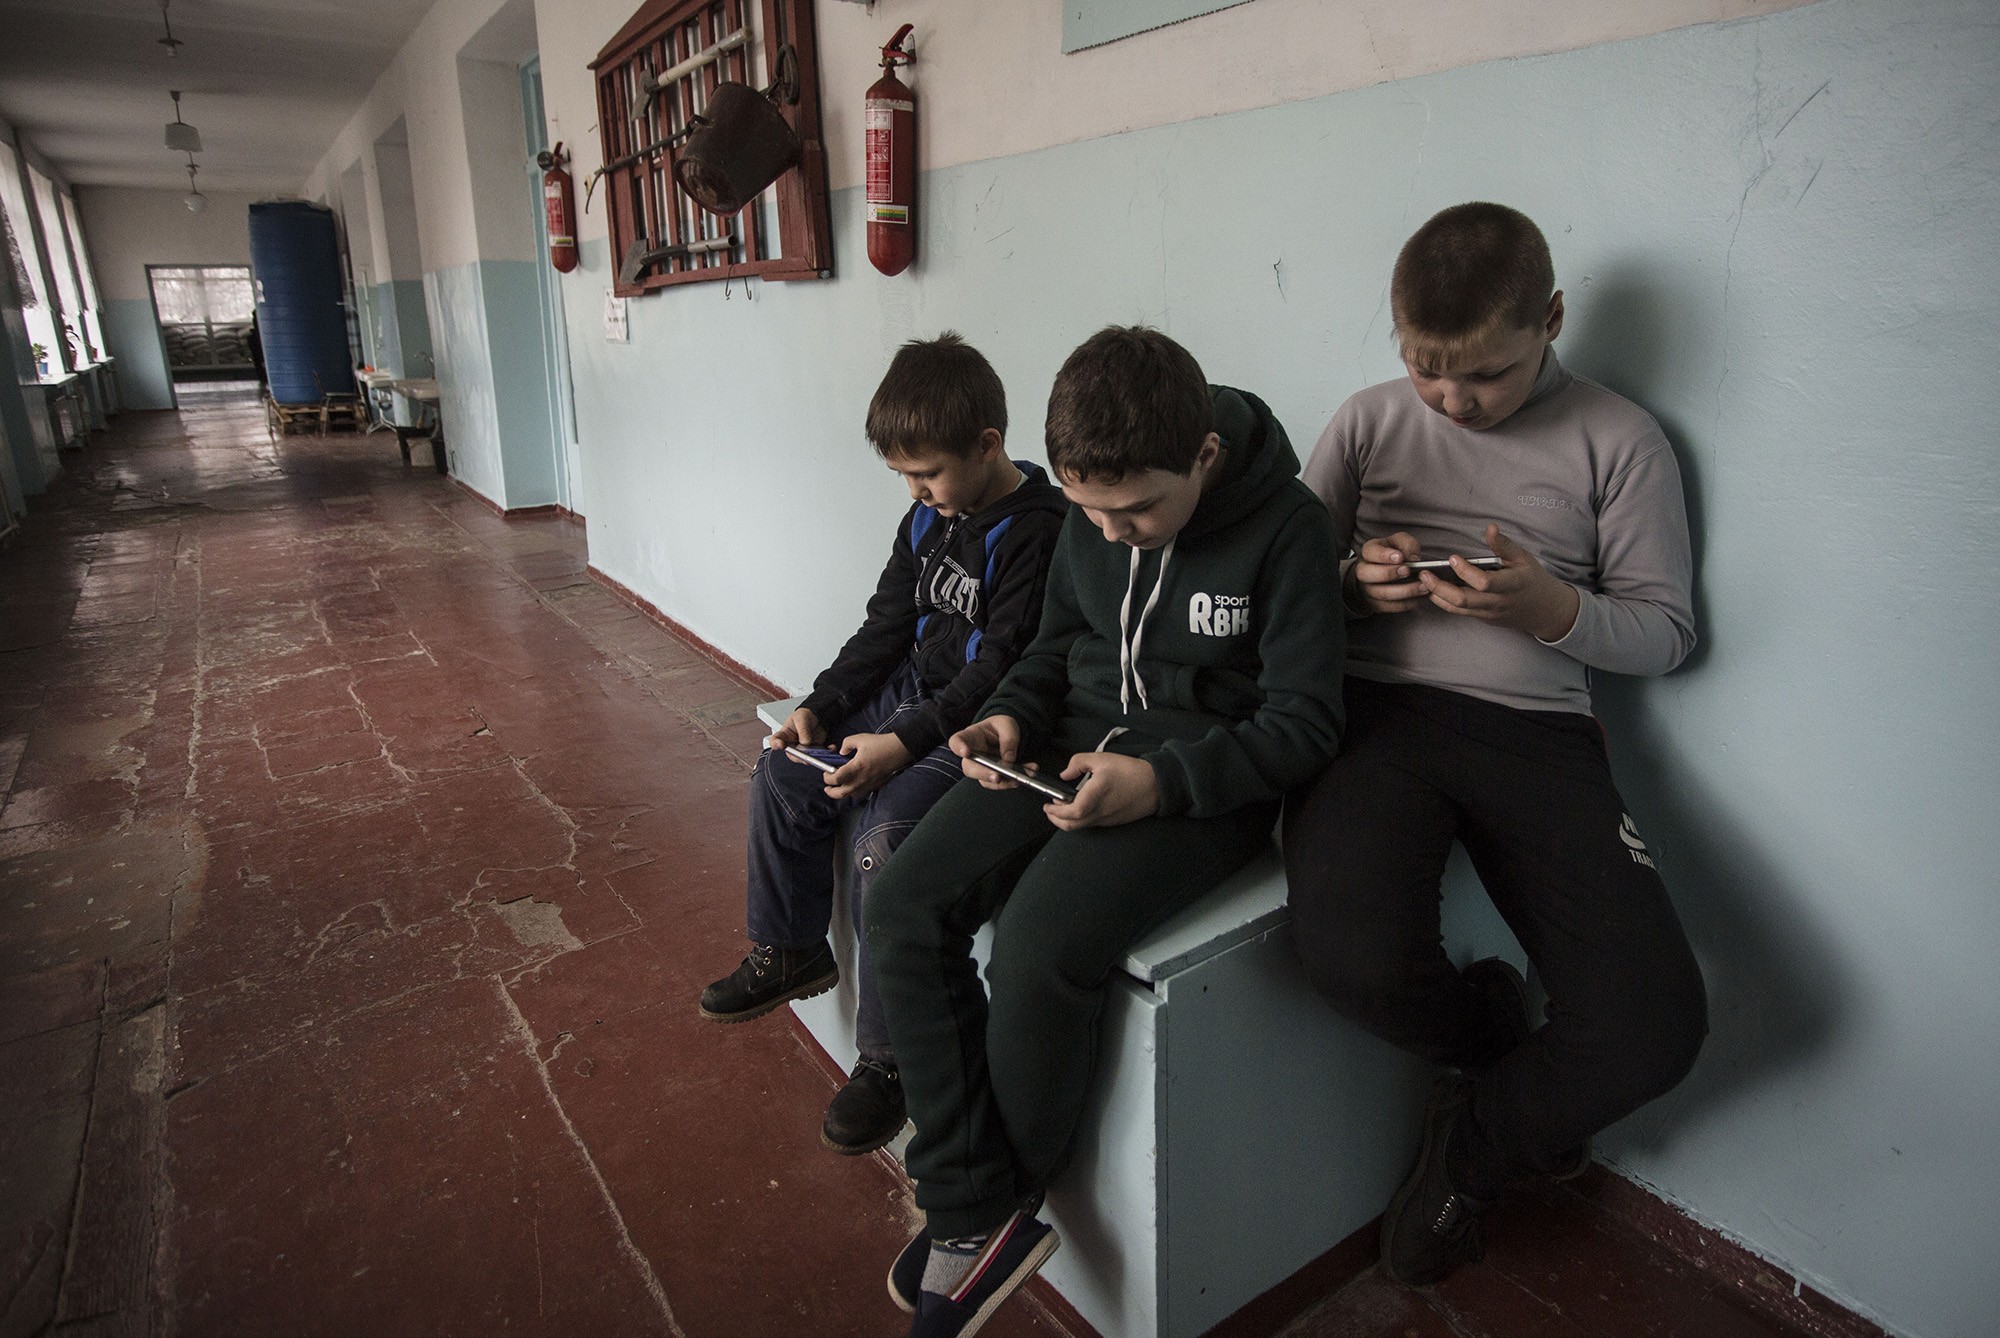 Students play mobile games at school in Verkniotoretske, Donetsk Oblast on Nov. 28.